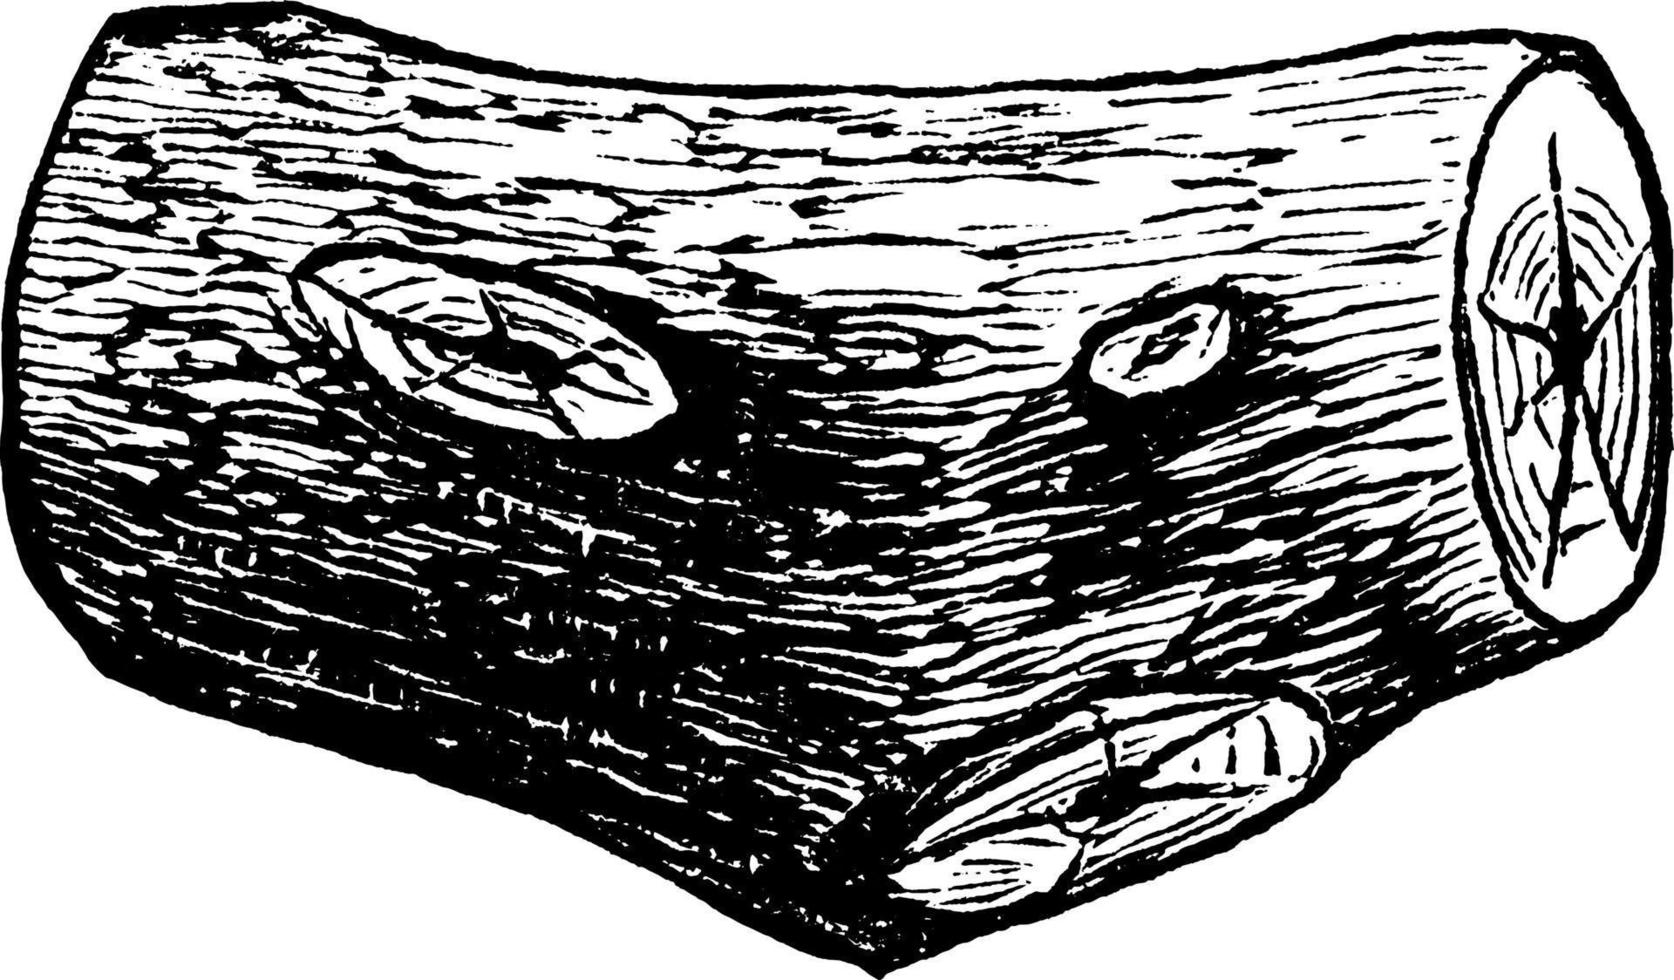 cesta de log, ilustração vintage. vetor